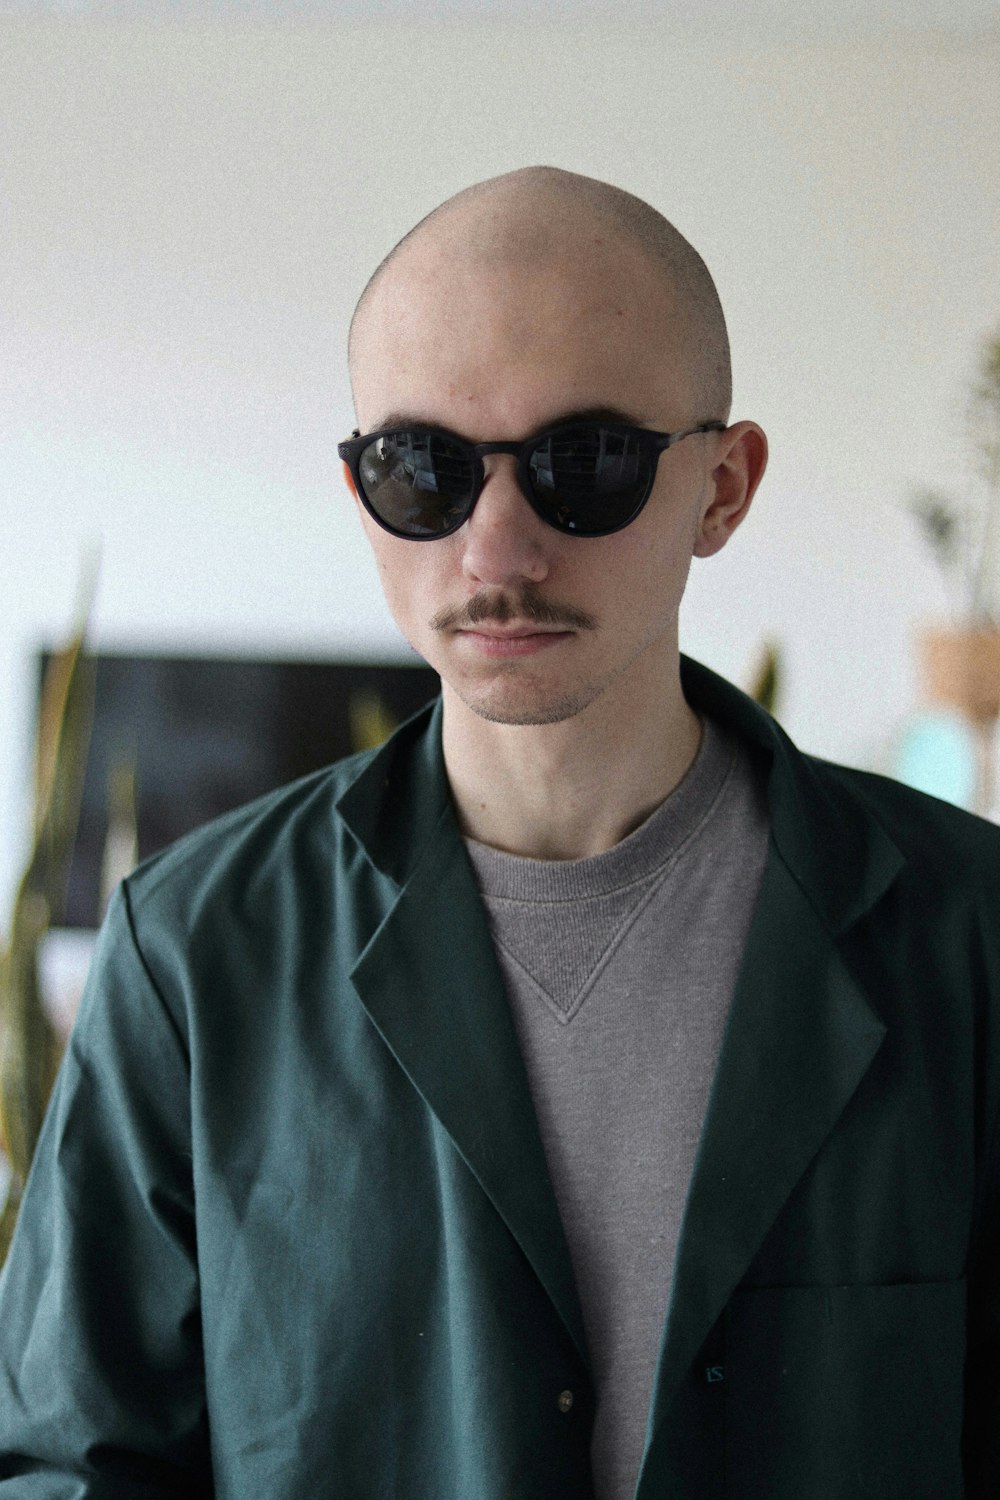 man in green button up shirt wearing black sunglasses